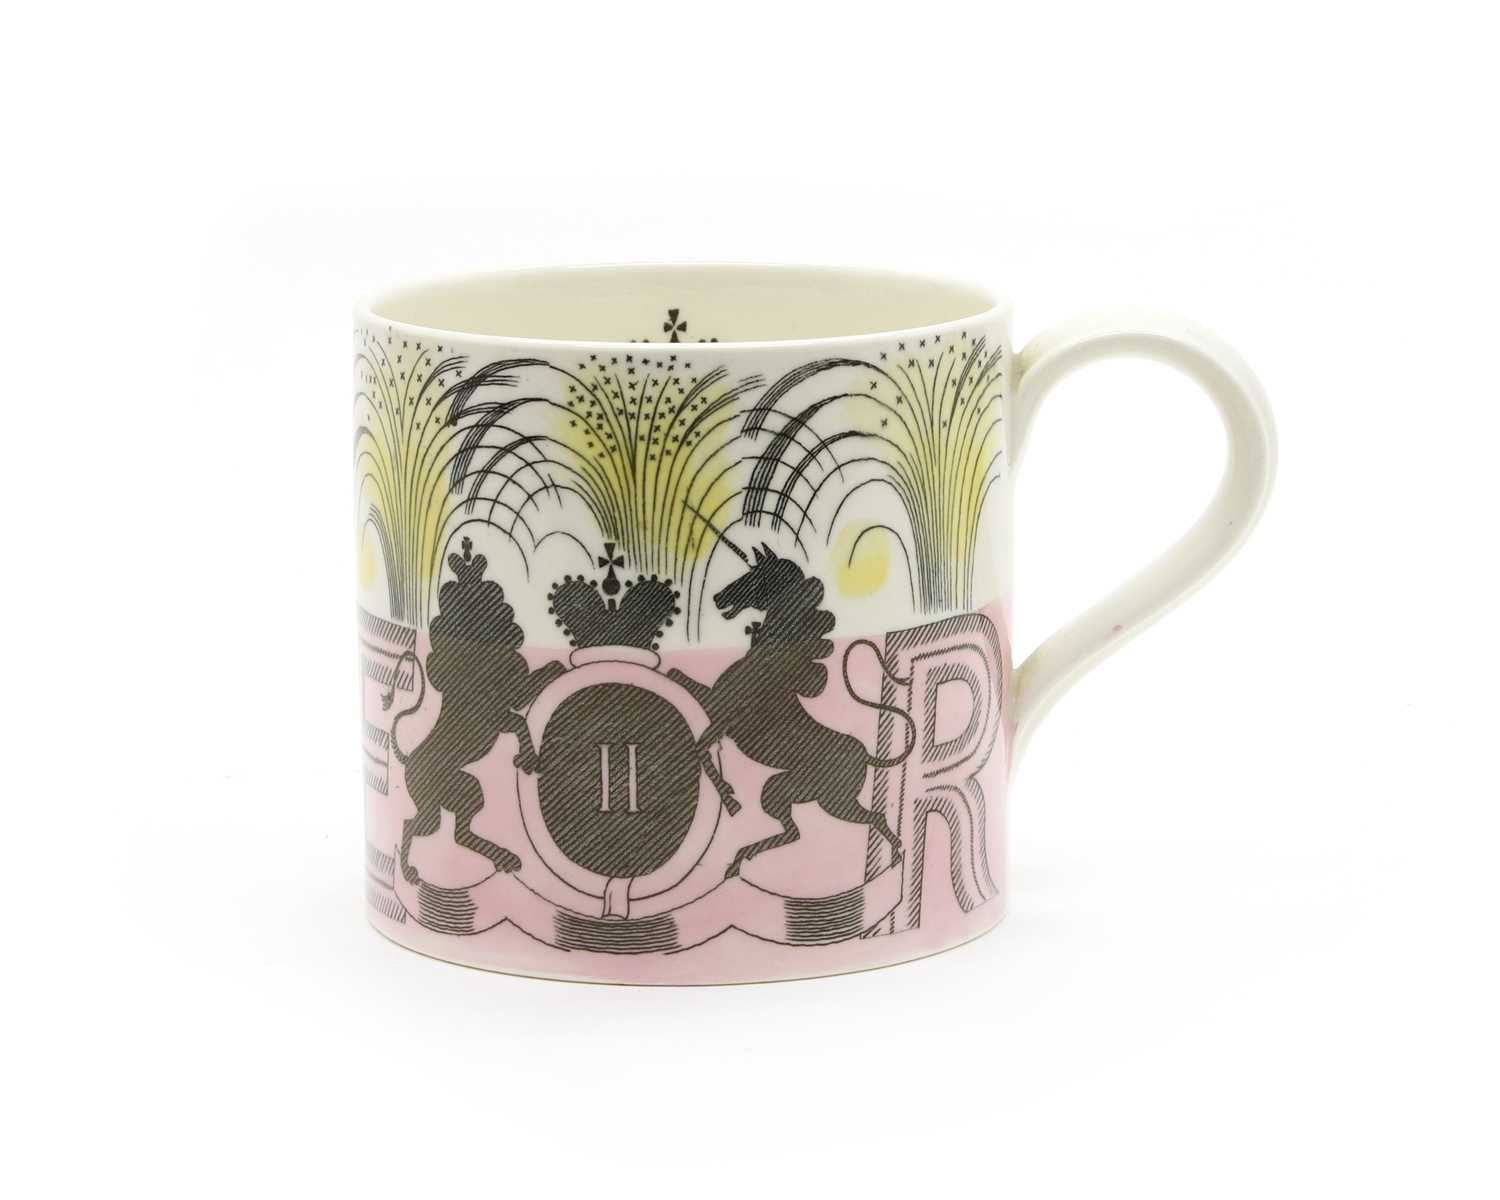 A Wedgwood Elizabeth II coronation mug, - Image 2 of 3